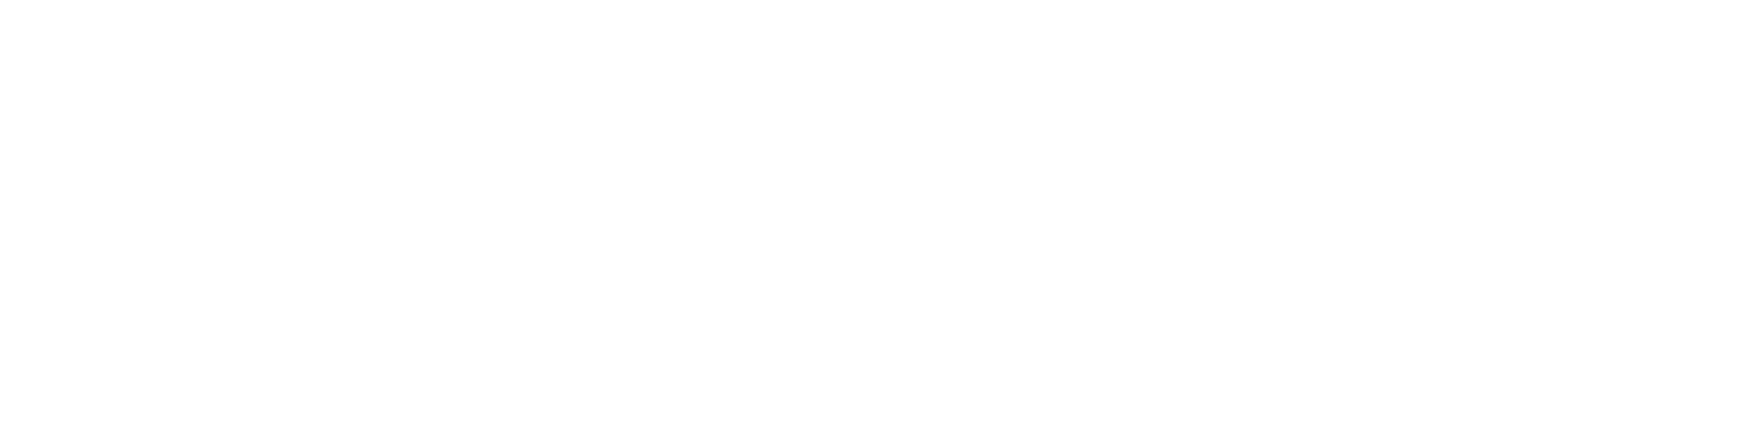 Habitual Media Logo transparent